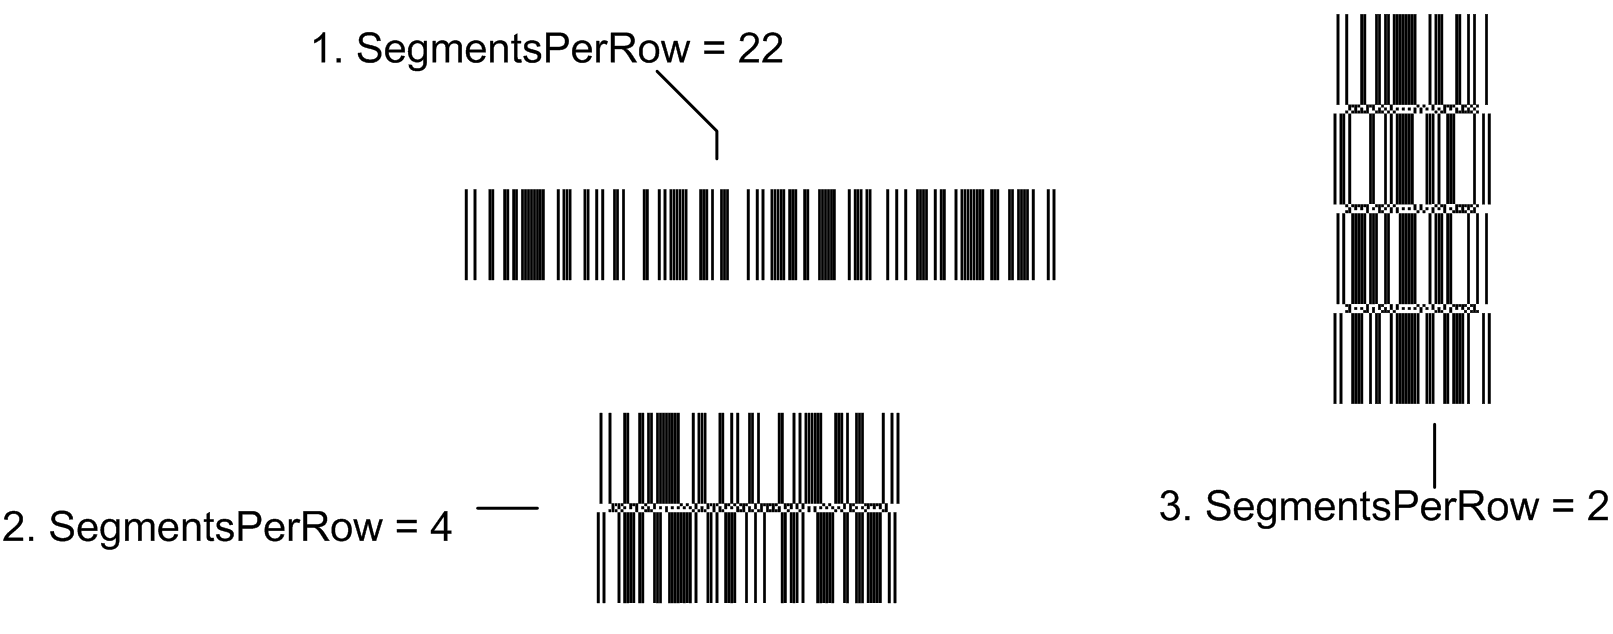 Barcode Sizes vs. SegmentPerRow